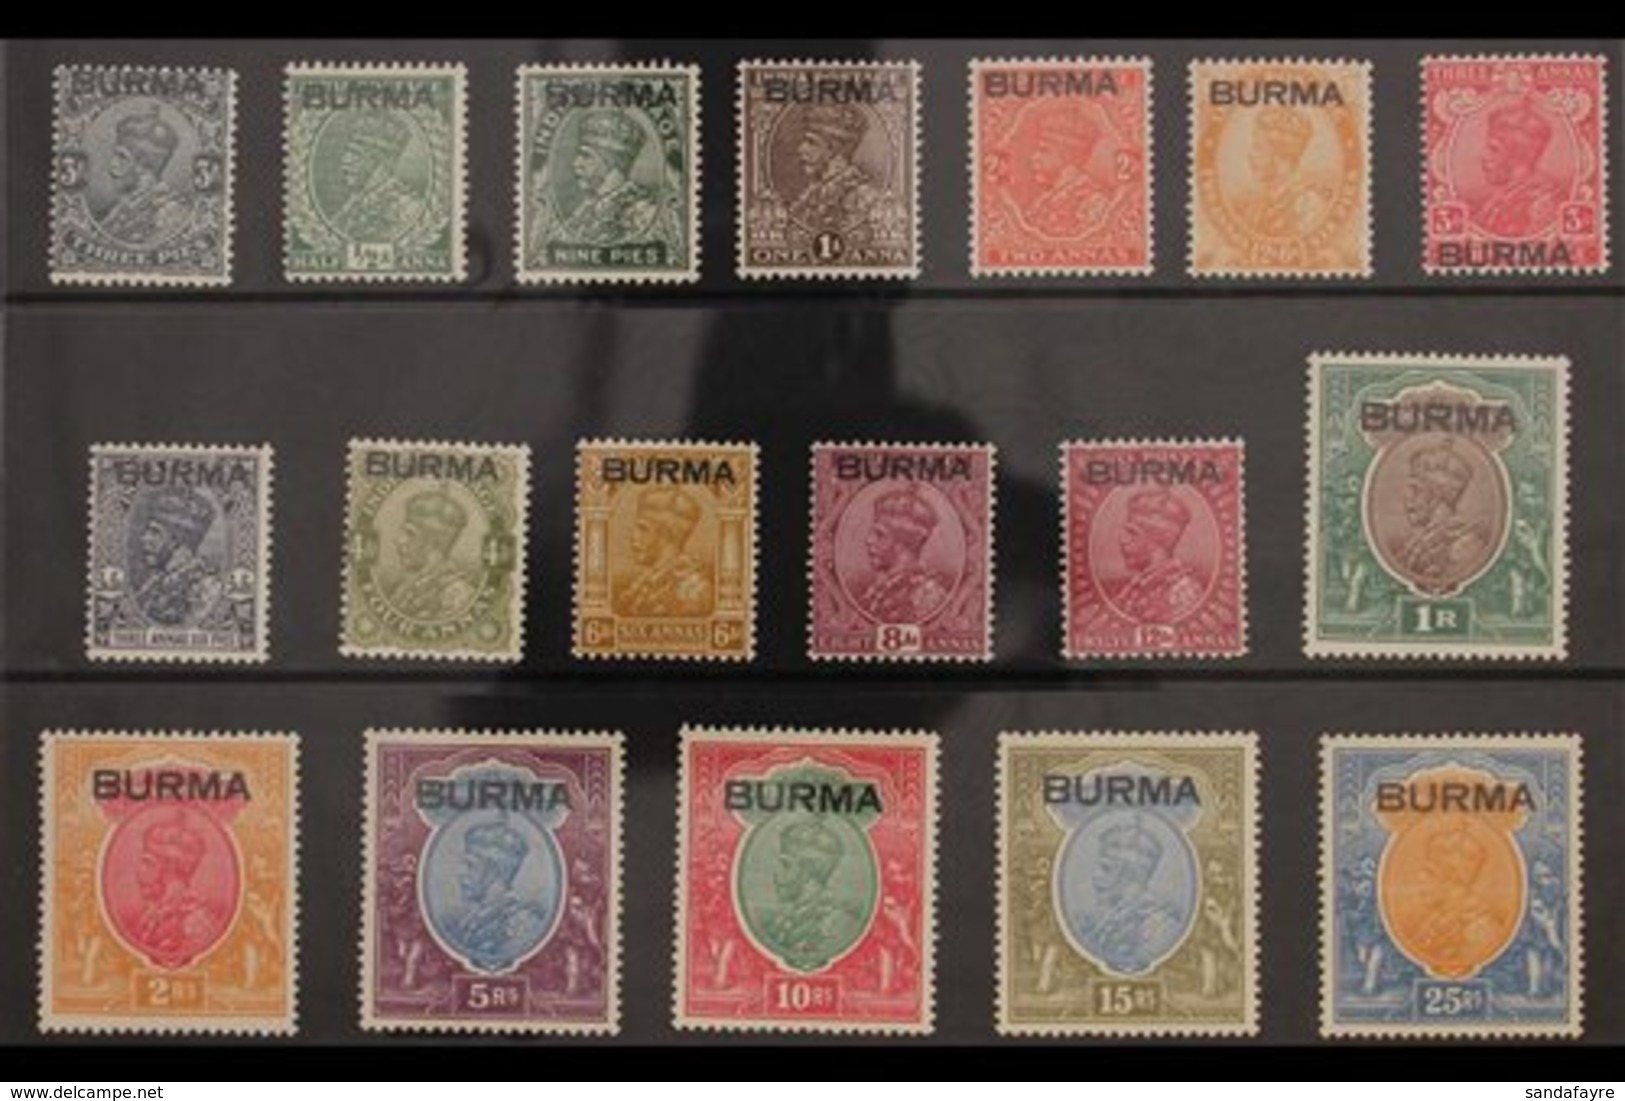 1937 (India KGV Overprinted) Complete Set, The 25R Watermark Inverted, SG 1/18aw, Very Fine Lightly Hinged Mint. Splendi - Birmanie (...-1947)